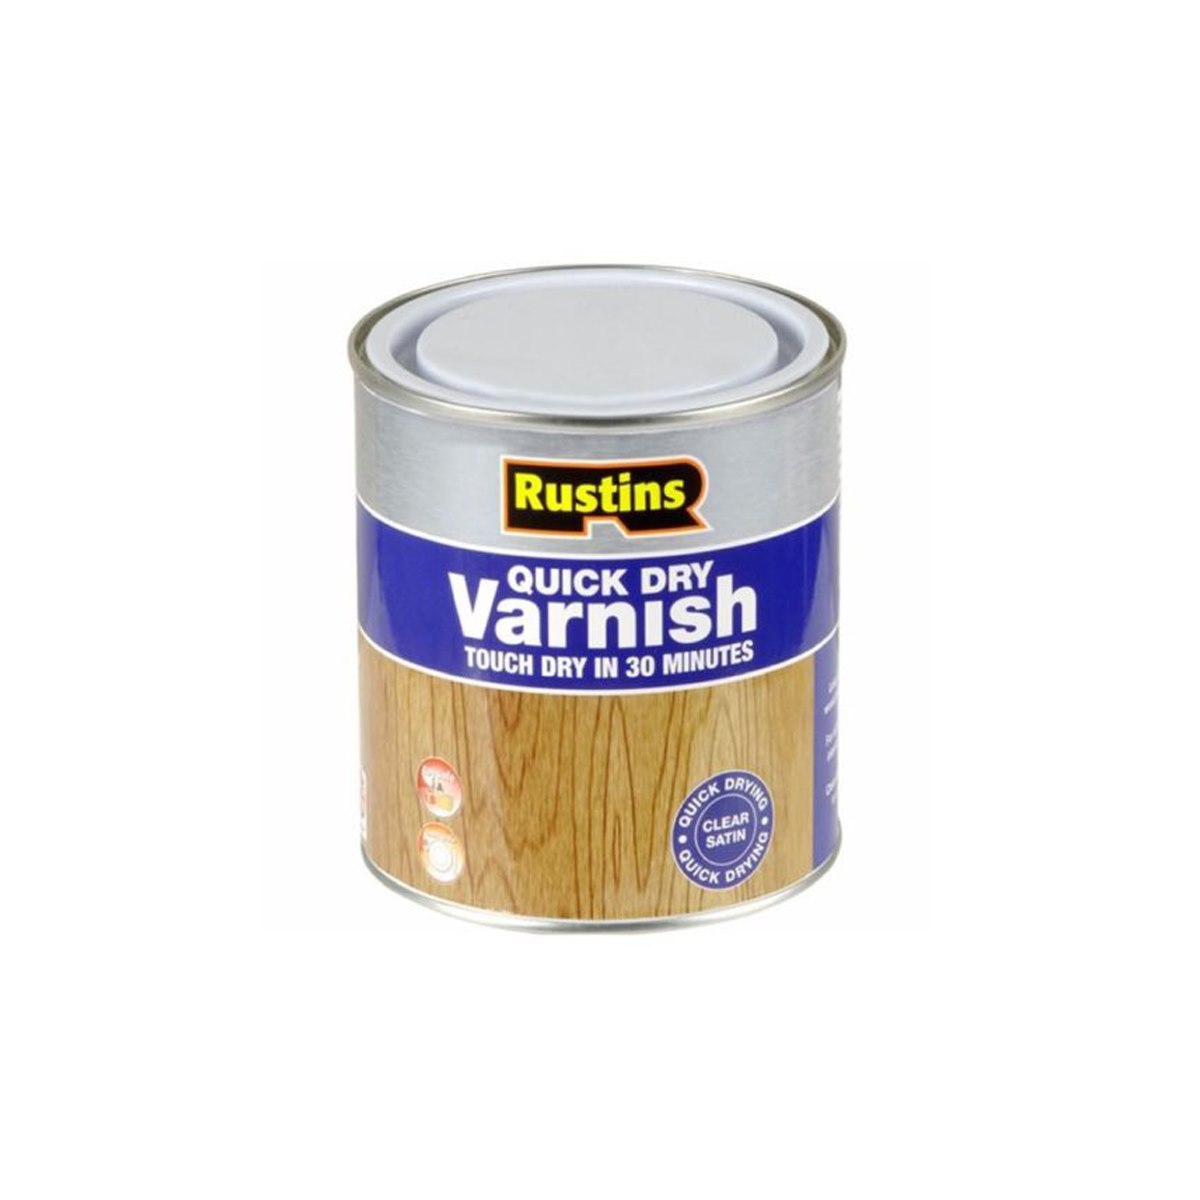 Rustins Quick Dry Varnish Satin Clear 1 Litre